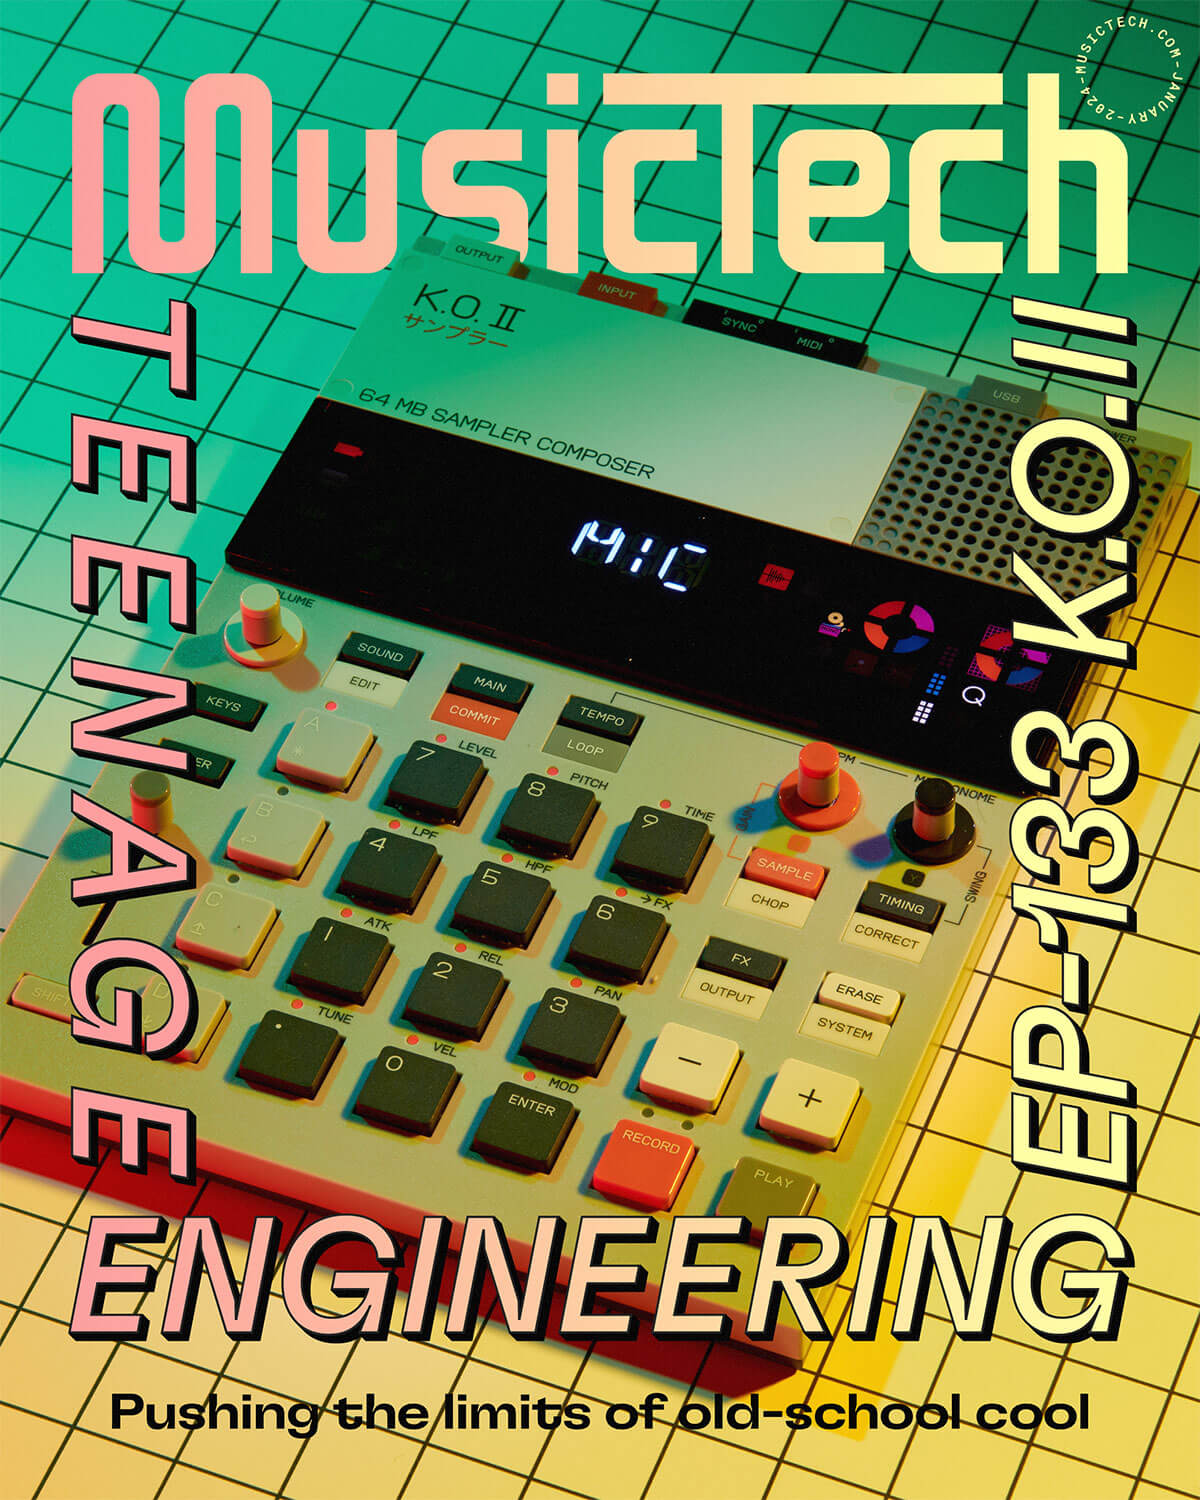 Teenage Engineering EP-133 K.O.II. Image: Simon Vinall for MusicTech